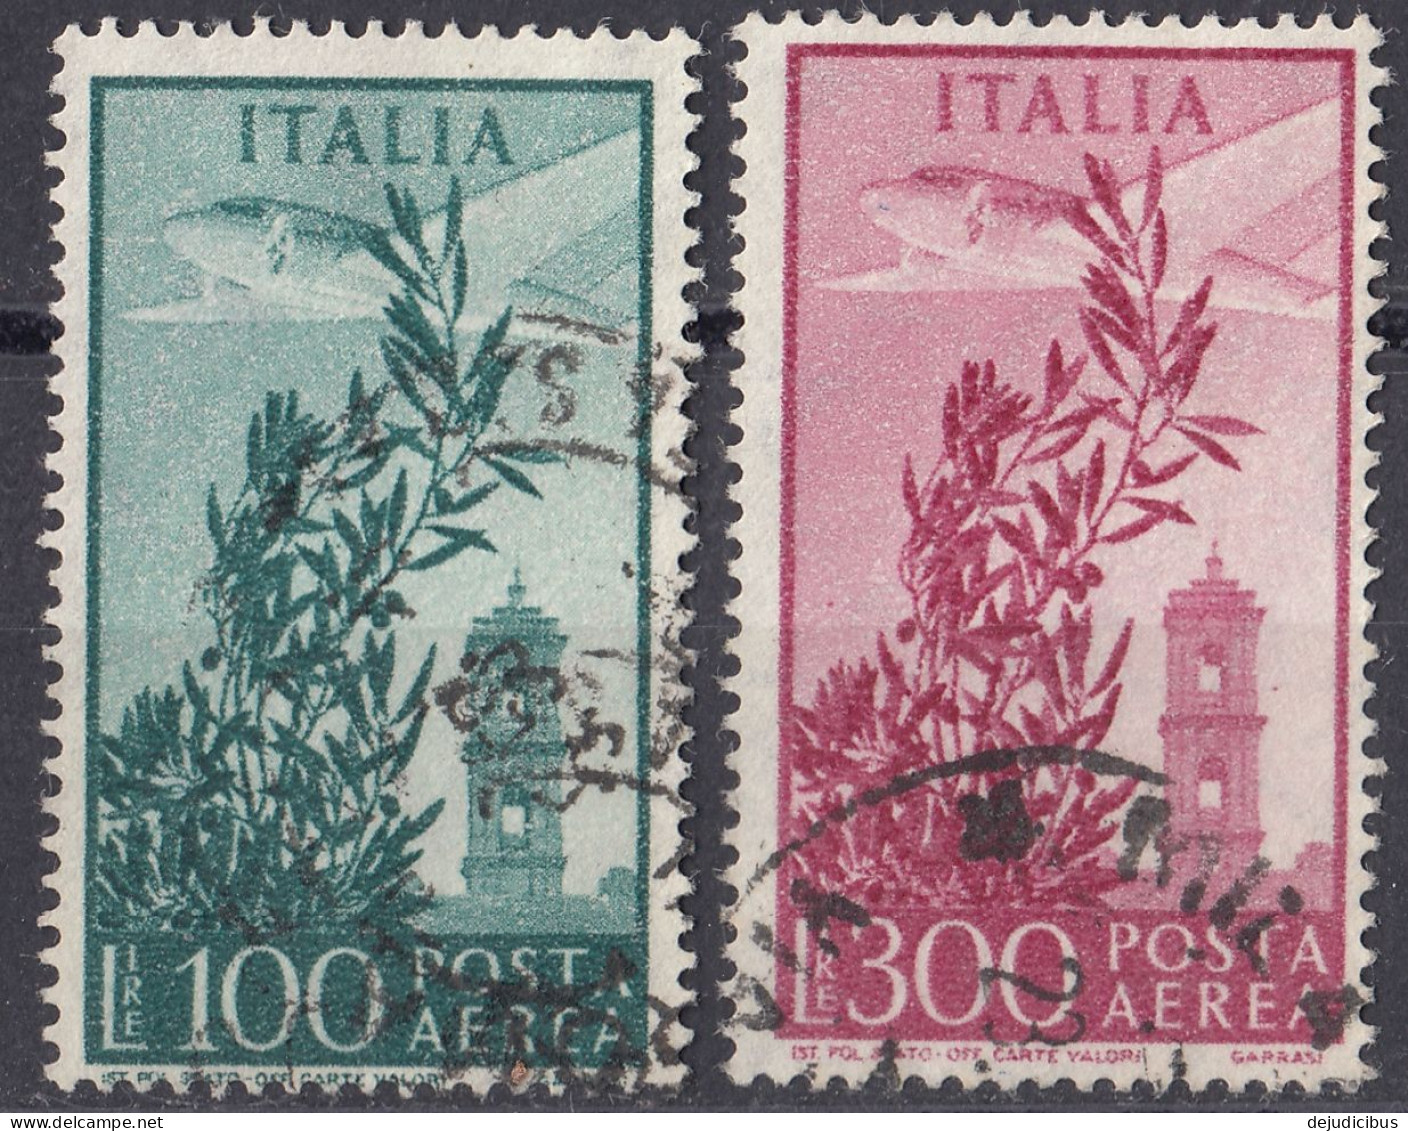 ITALIA - 1955/1959 - Serie Completa Usata Formata Da 2 Valori: Yvert Posta Aerea 136/137. - Luftpost